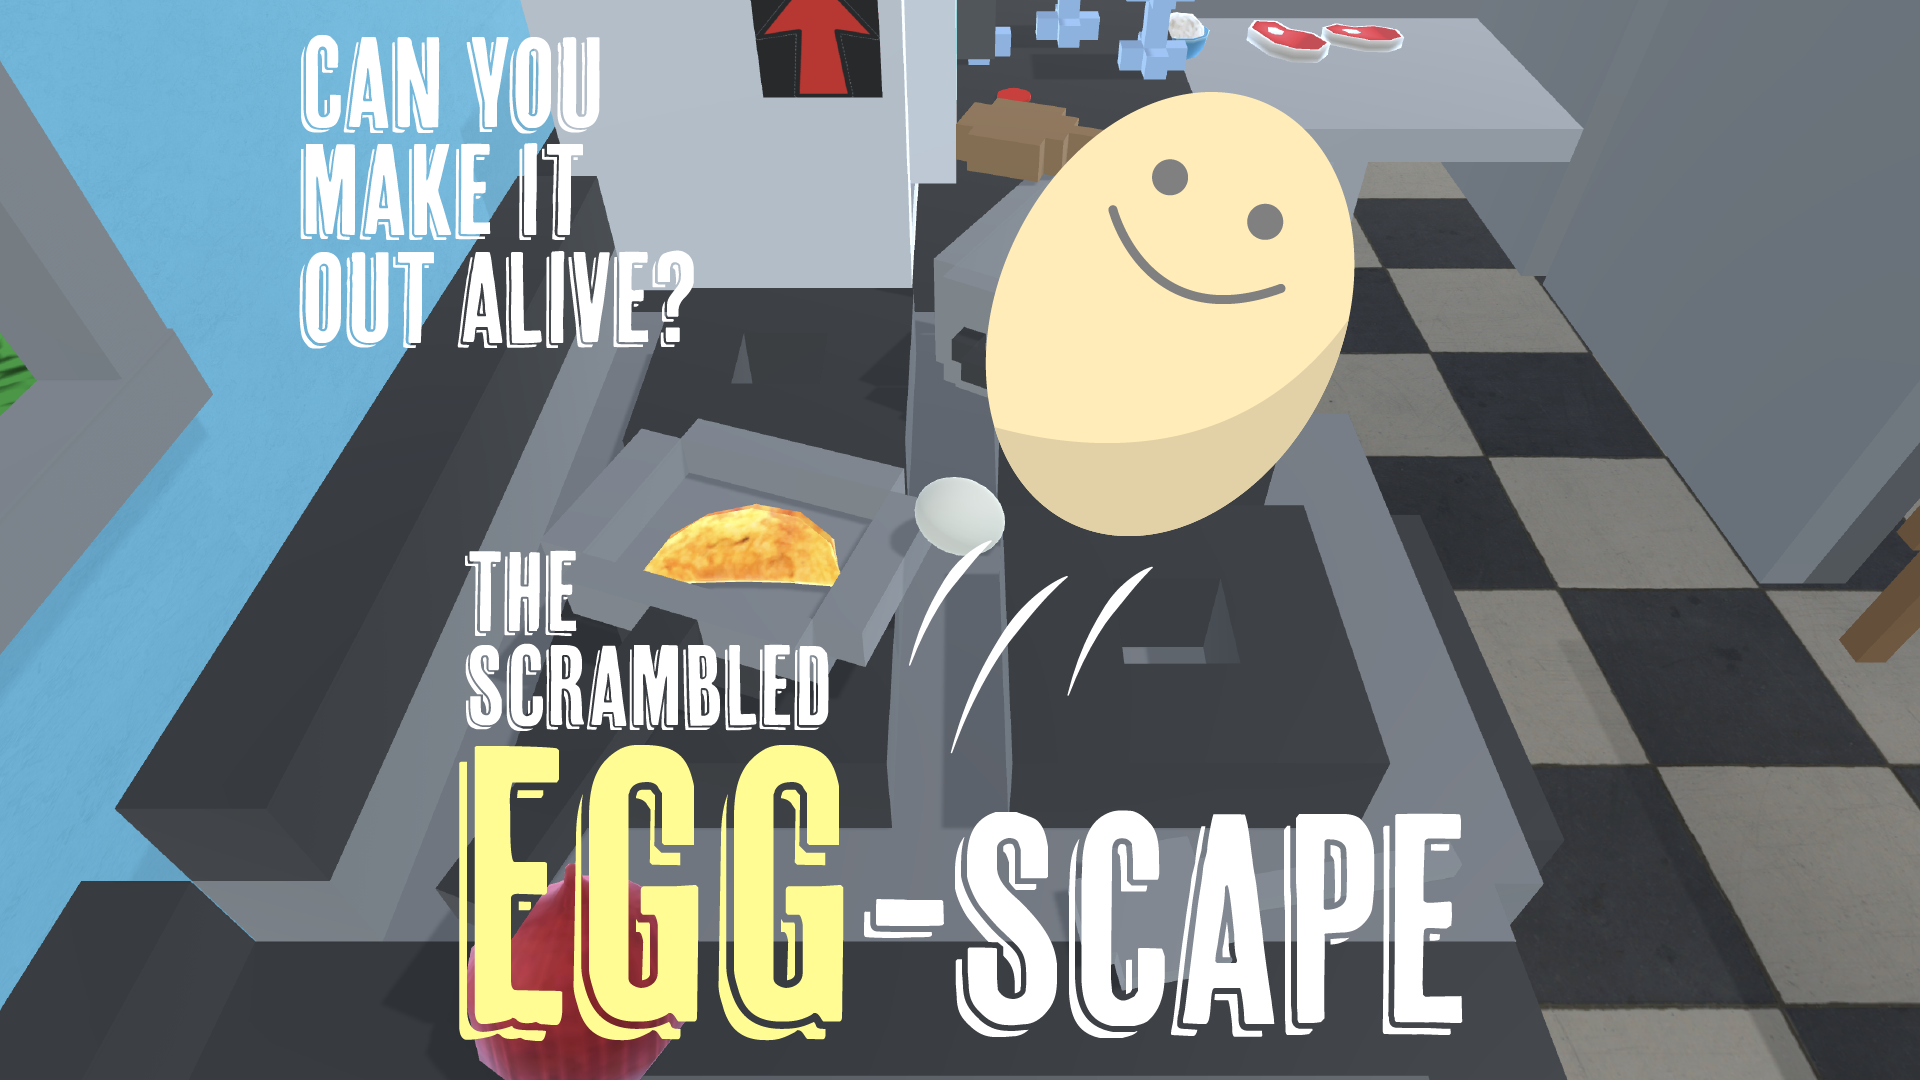 The Scrambled Egg-scape